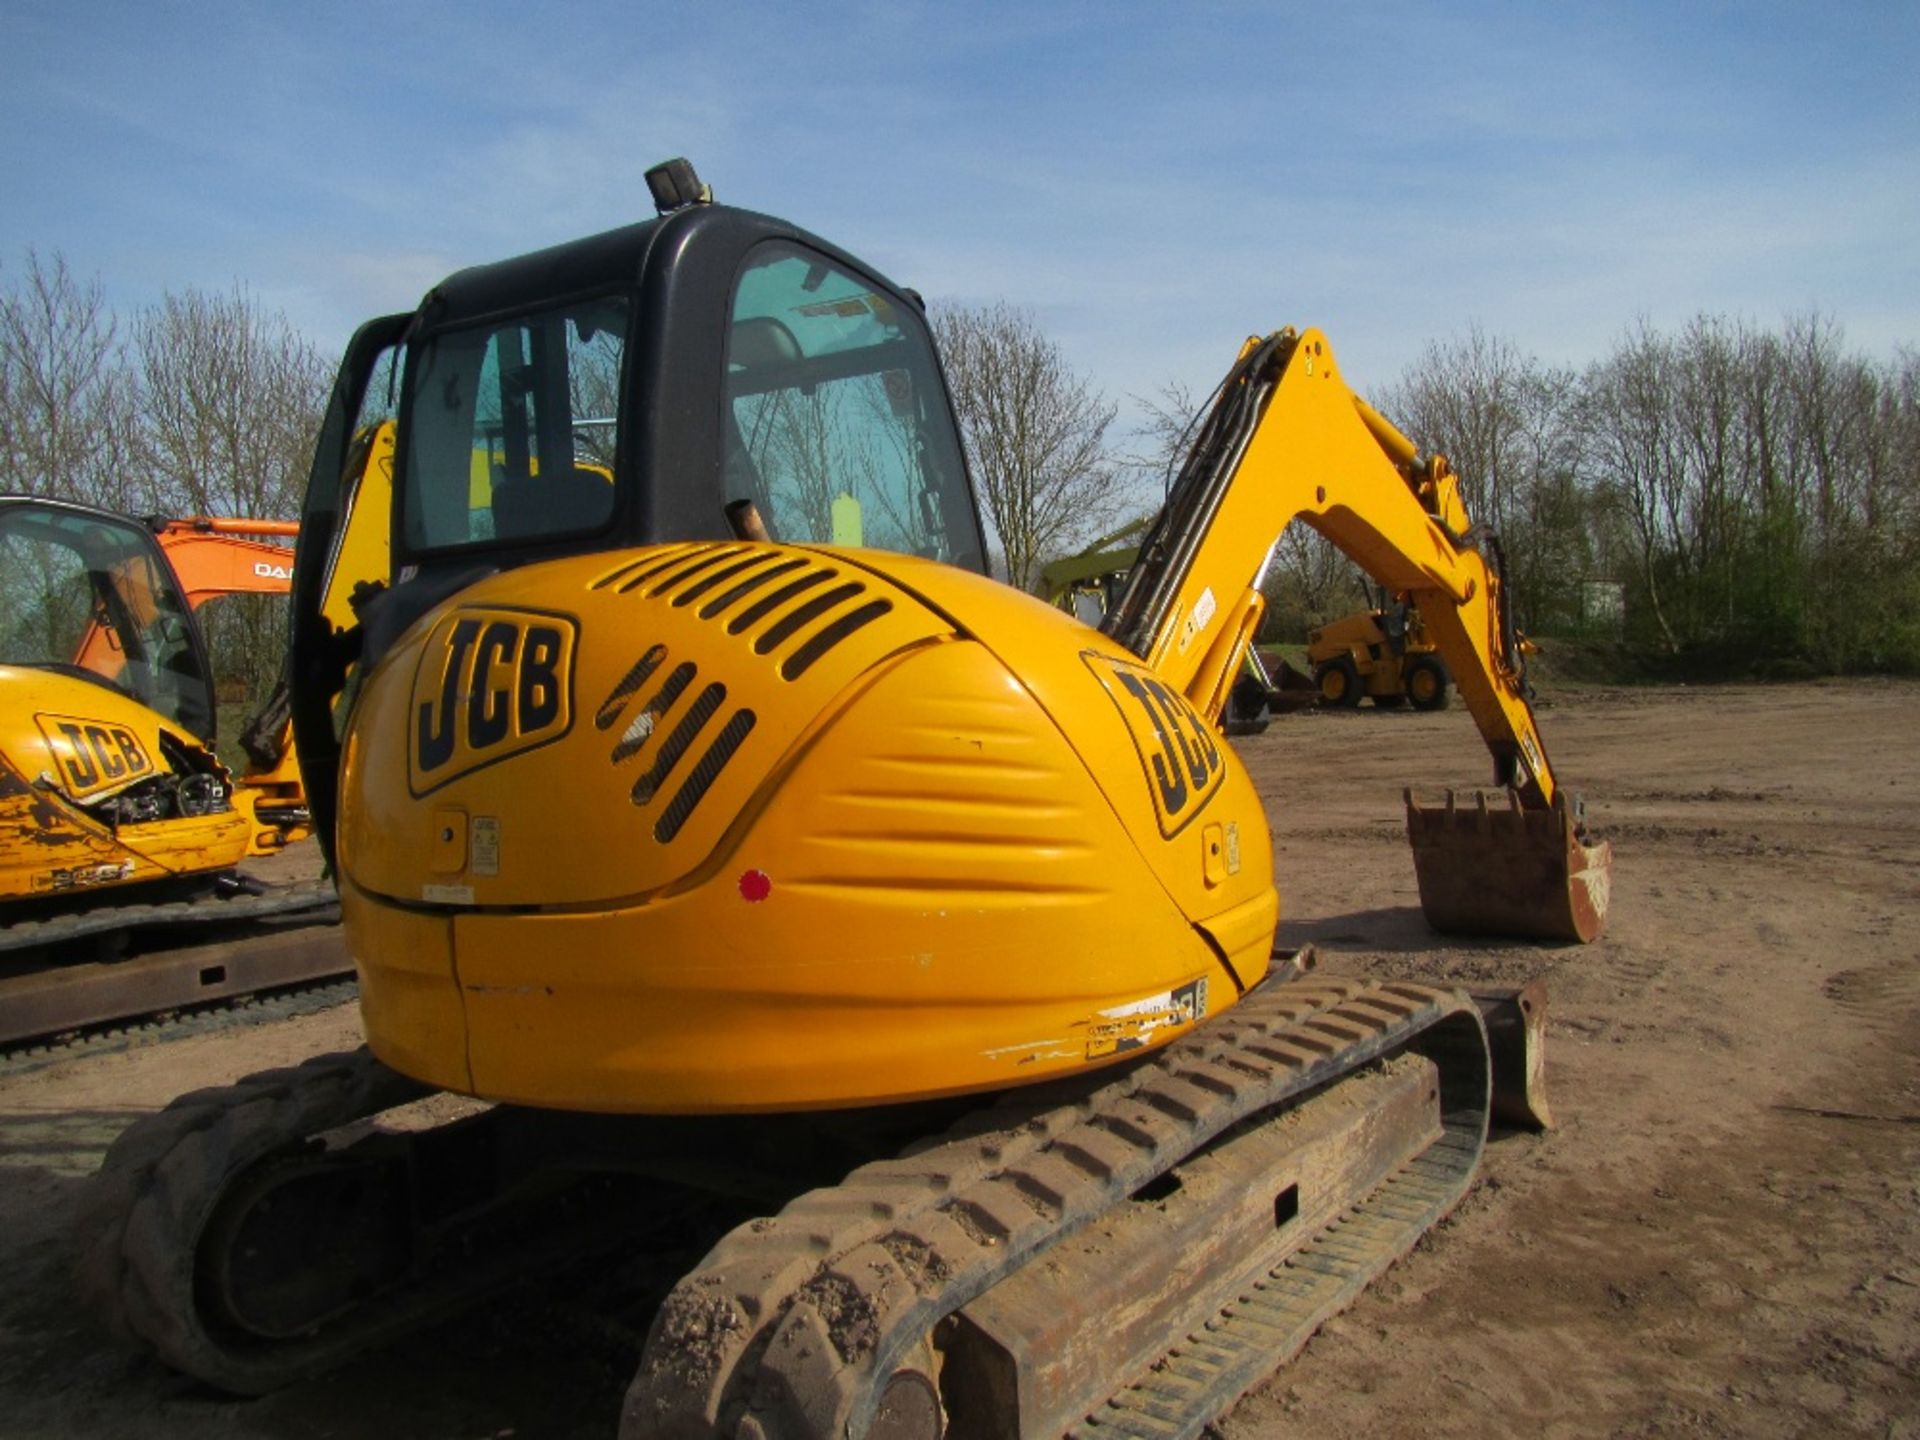 2006 JCB 8080 Excavator Ser. No. 61025534 - Image 6 of 10